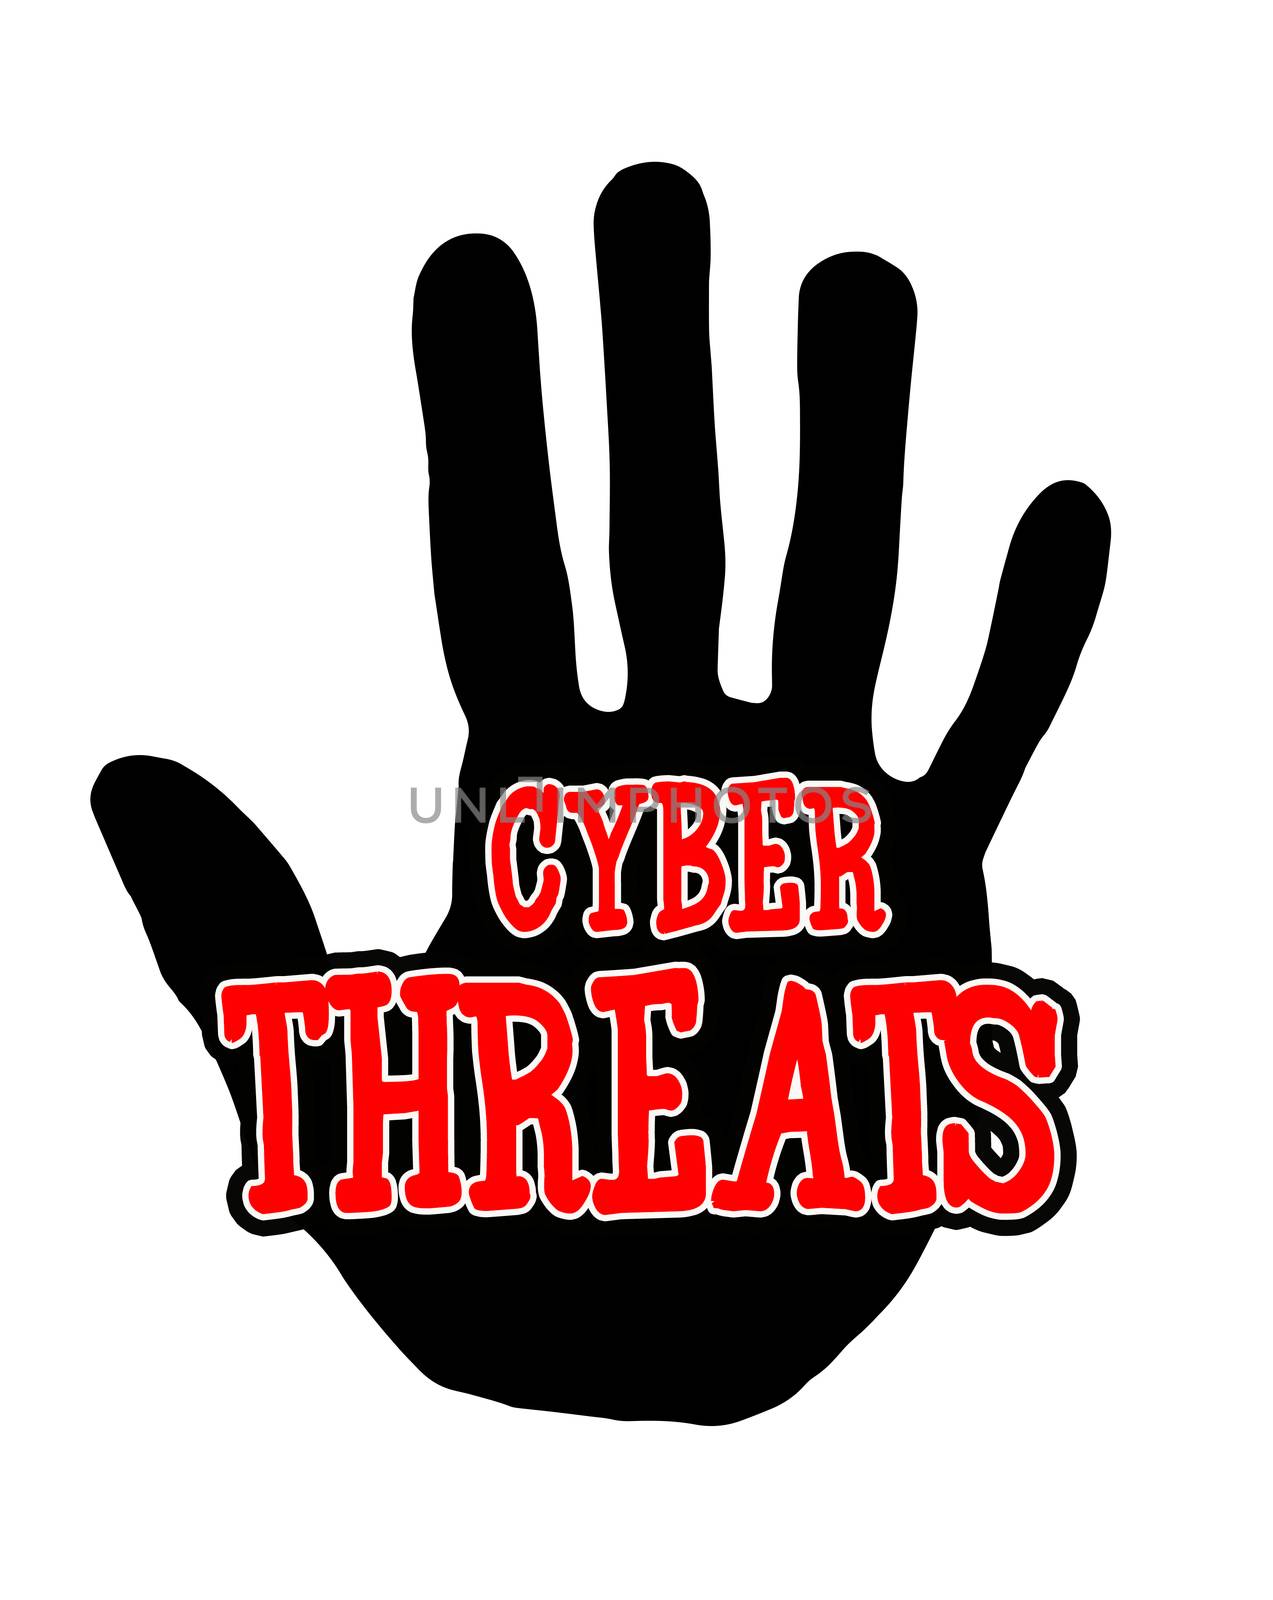 Handprint cyber threats by Milovan